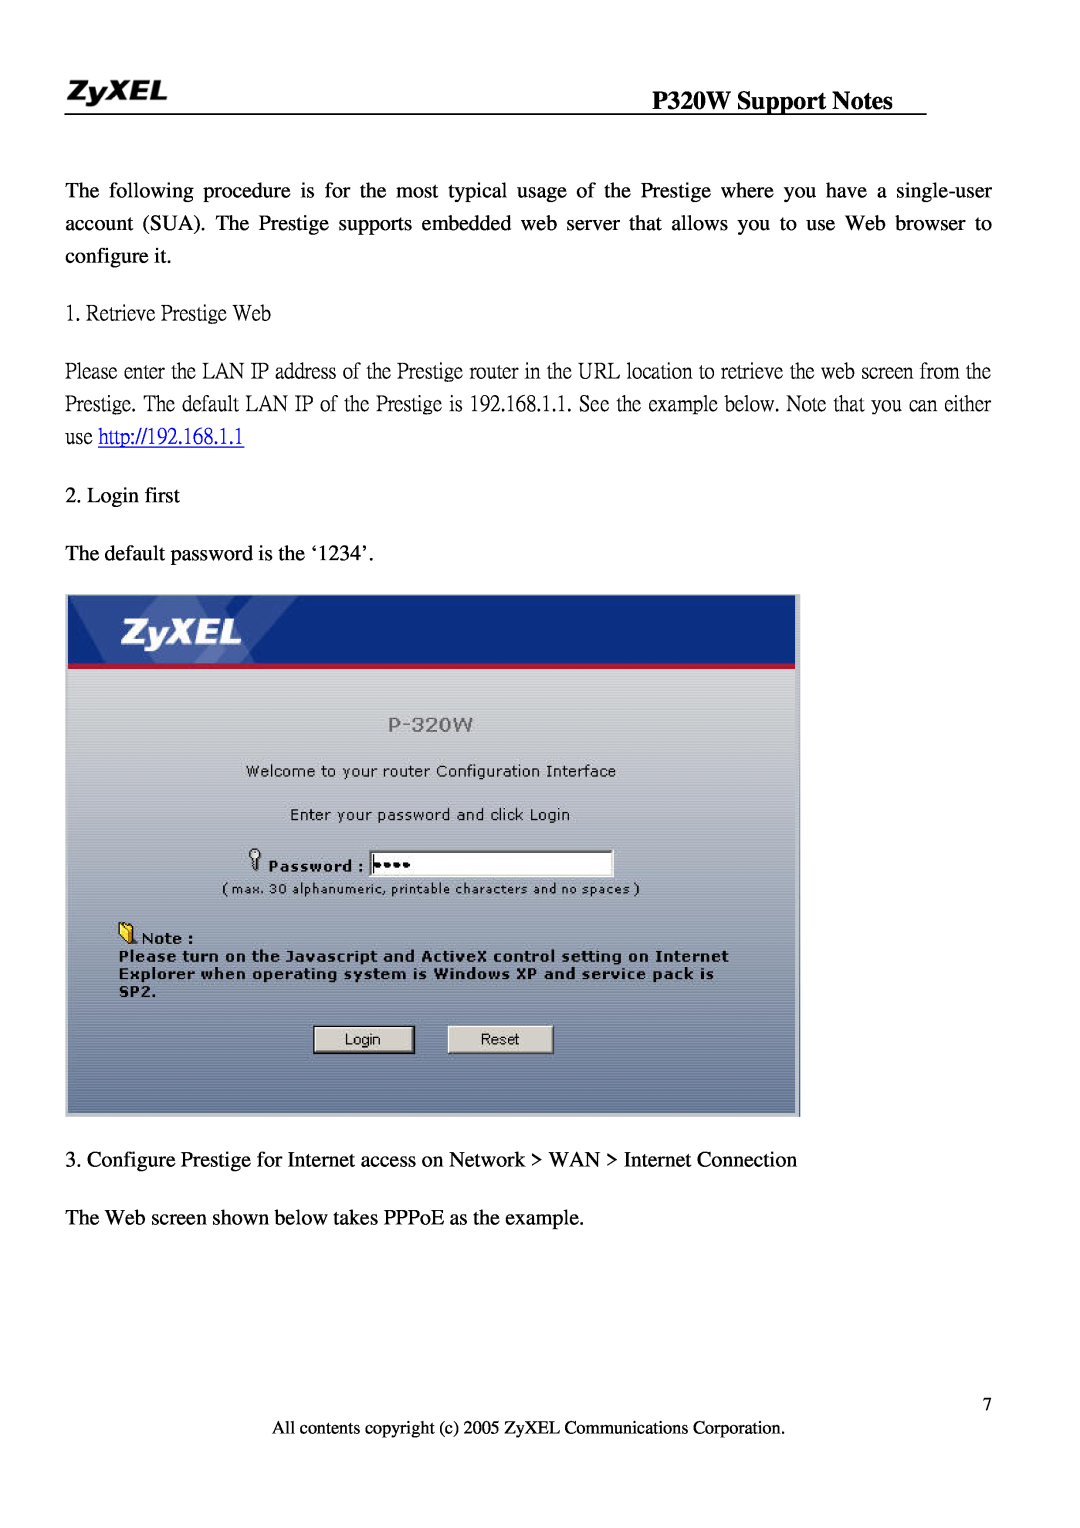 ZyXEL Communications manual P320W Support Notes, Retrieve Prestige Web 